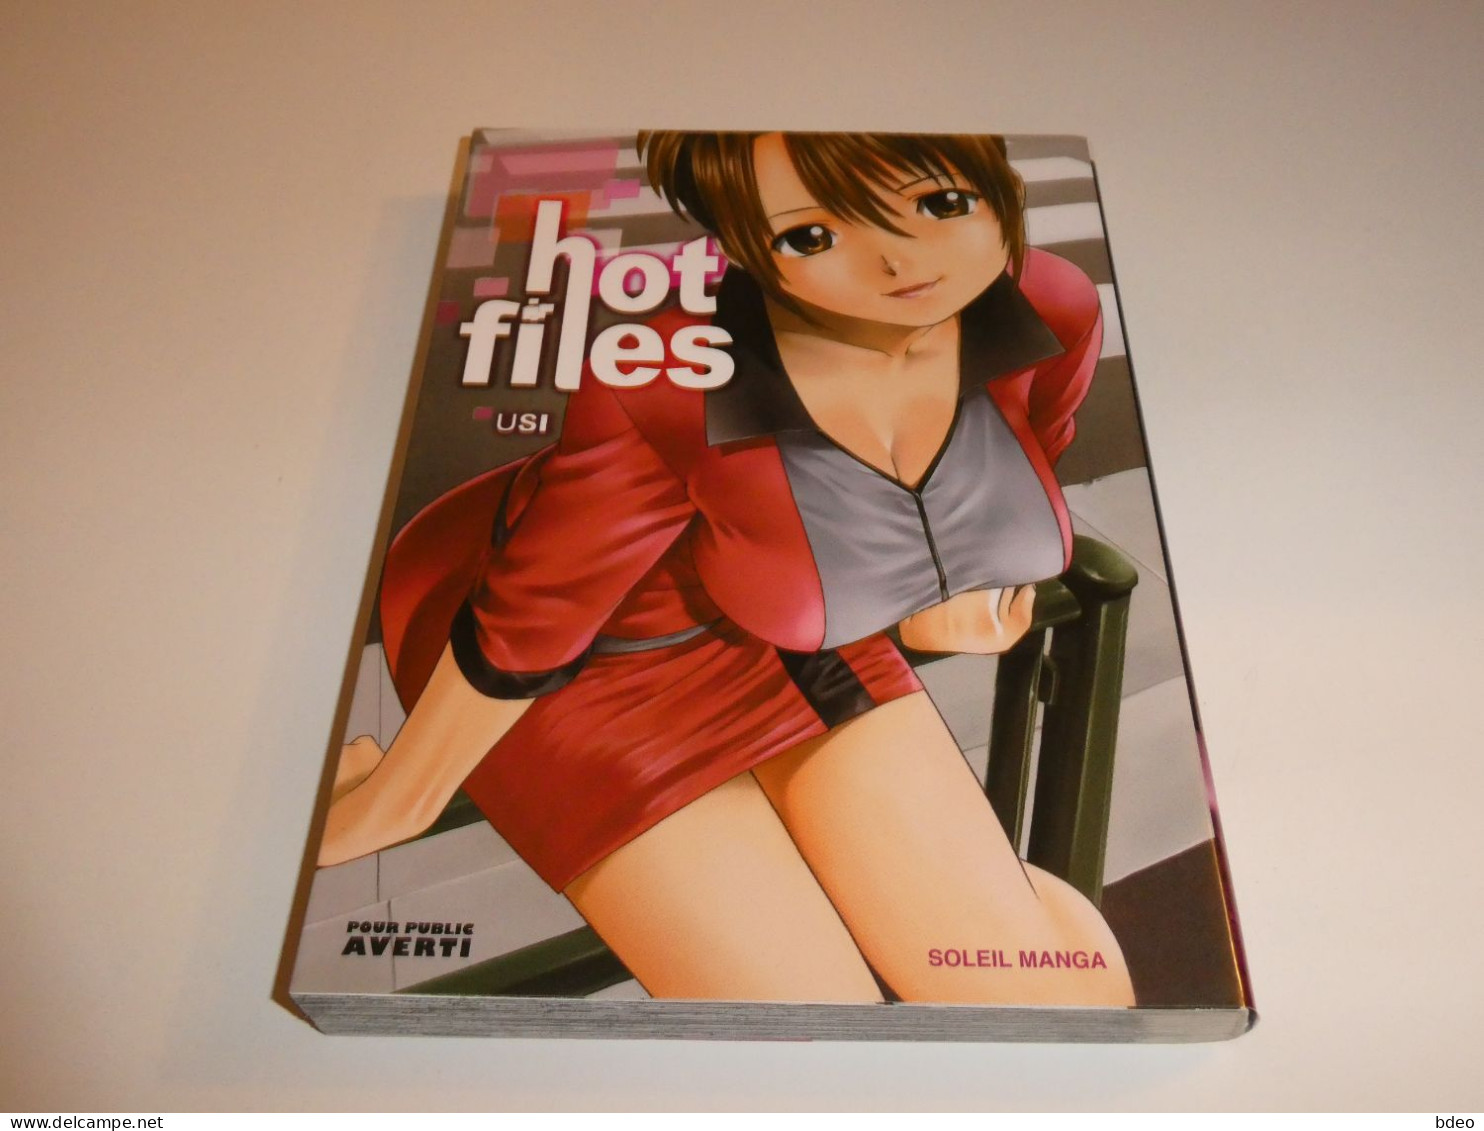 HOT FILES / TBE - Mangas Version Francesa